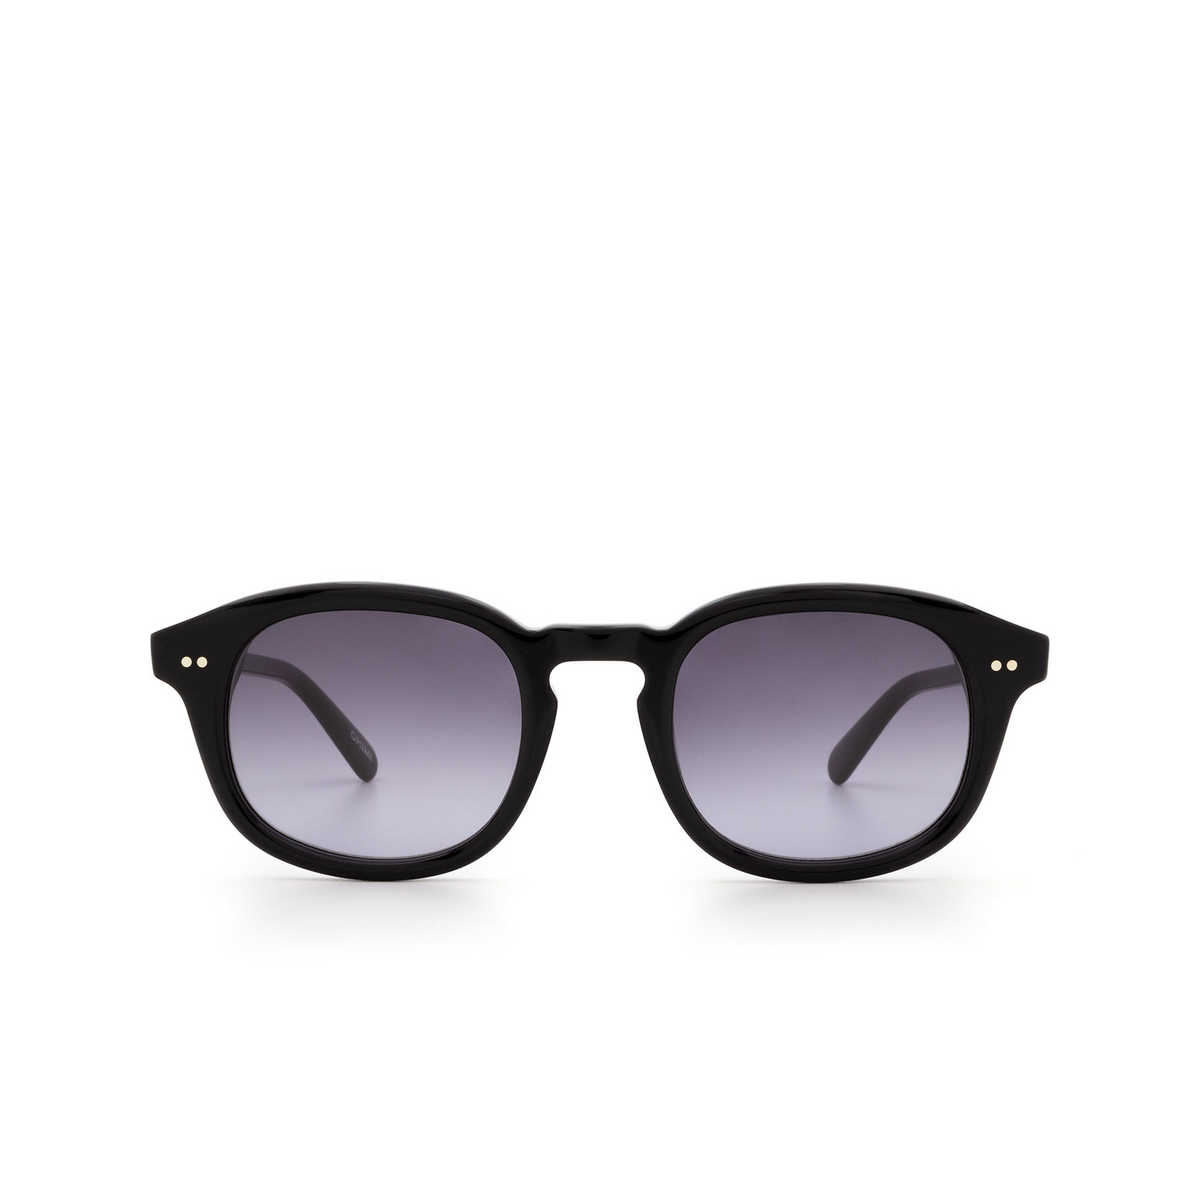 Chimi® Square Sunglasses: #102 color Black - front view.